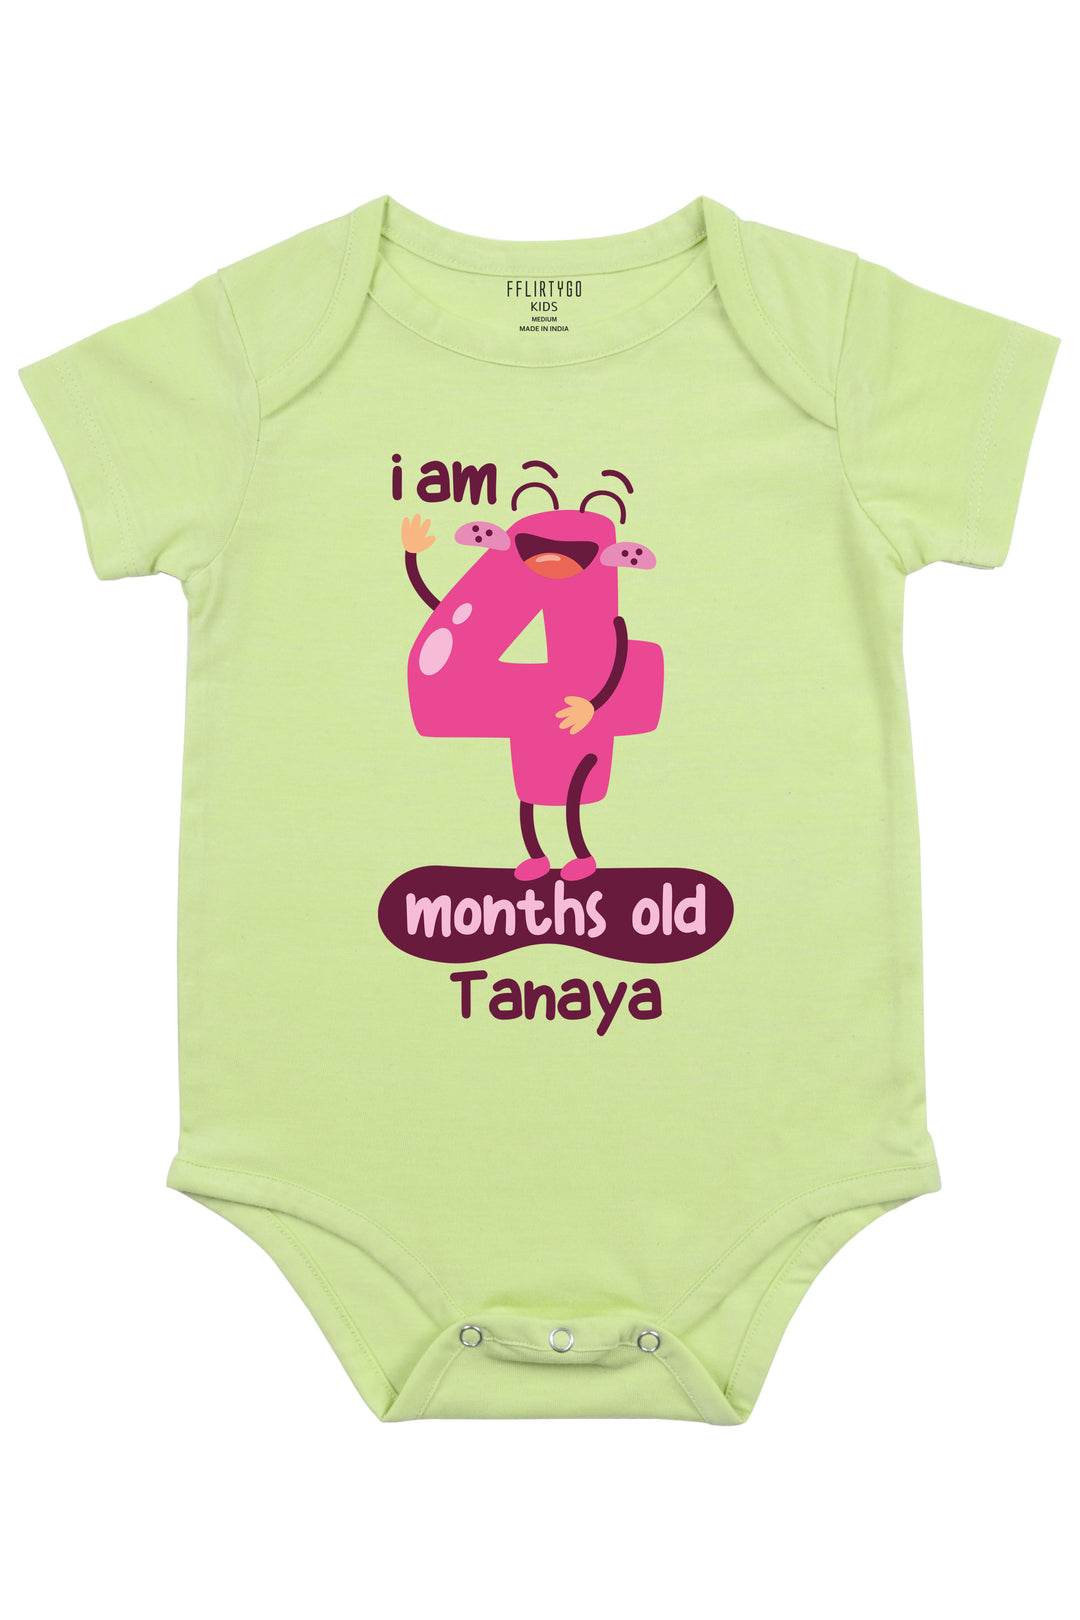 Four Month Milestone Baby Romper | Onesies w/ Custom Name